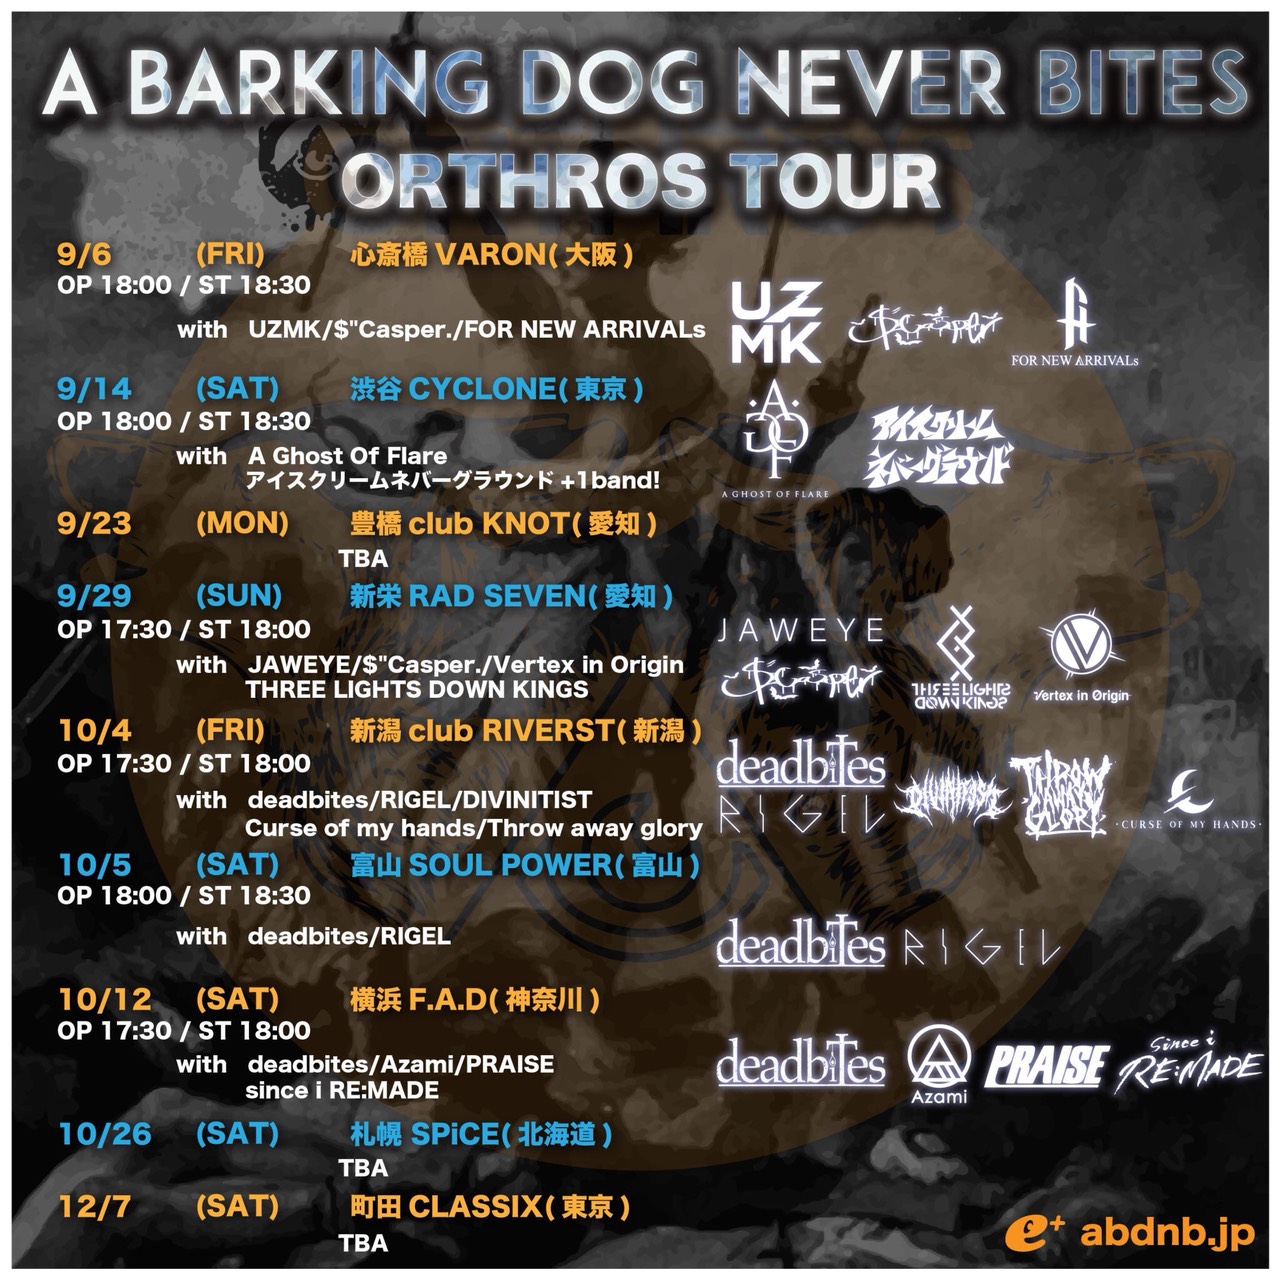 A BARKING DOG NEVER BITES ORTHROS TOUR